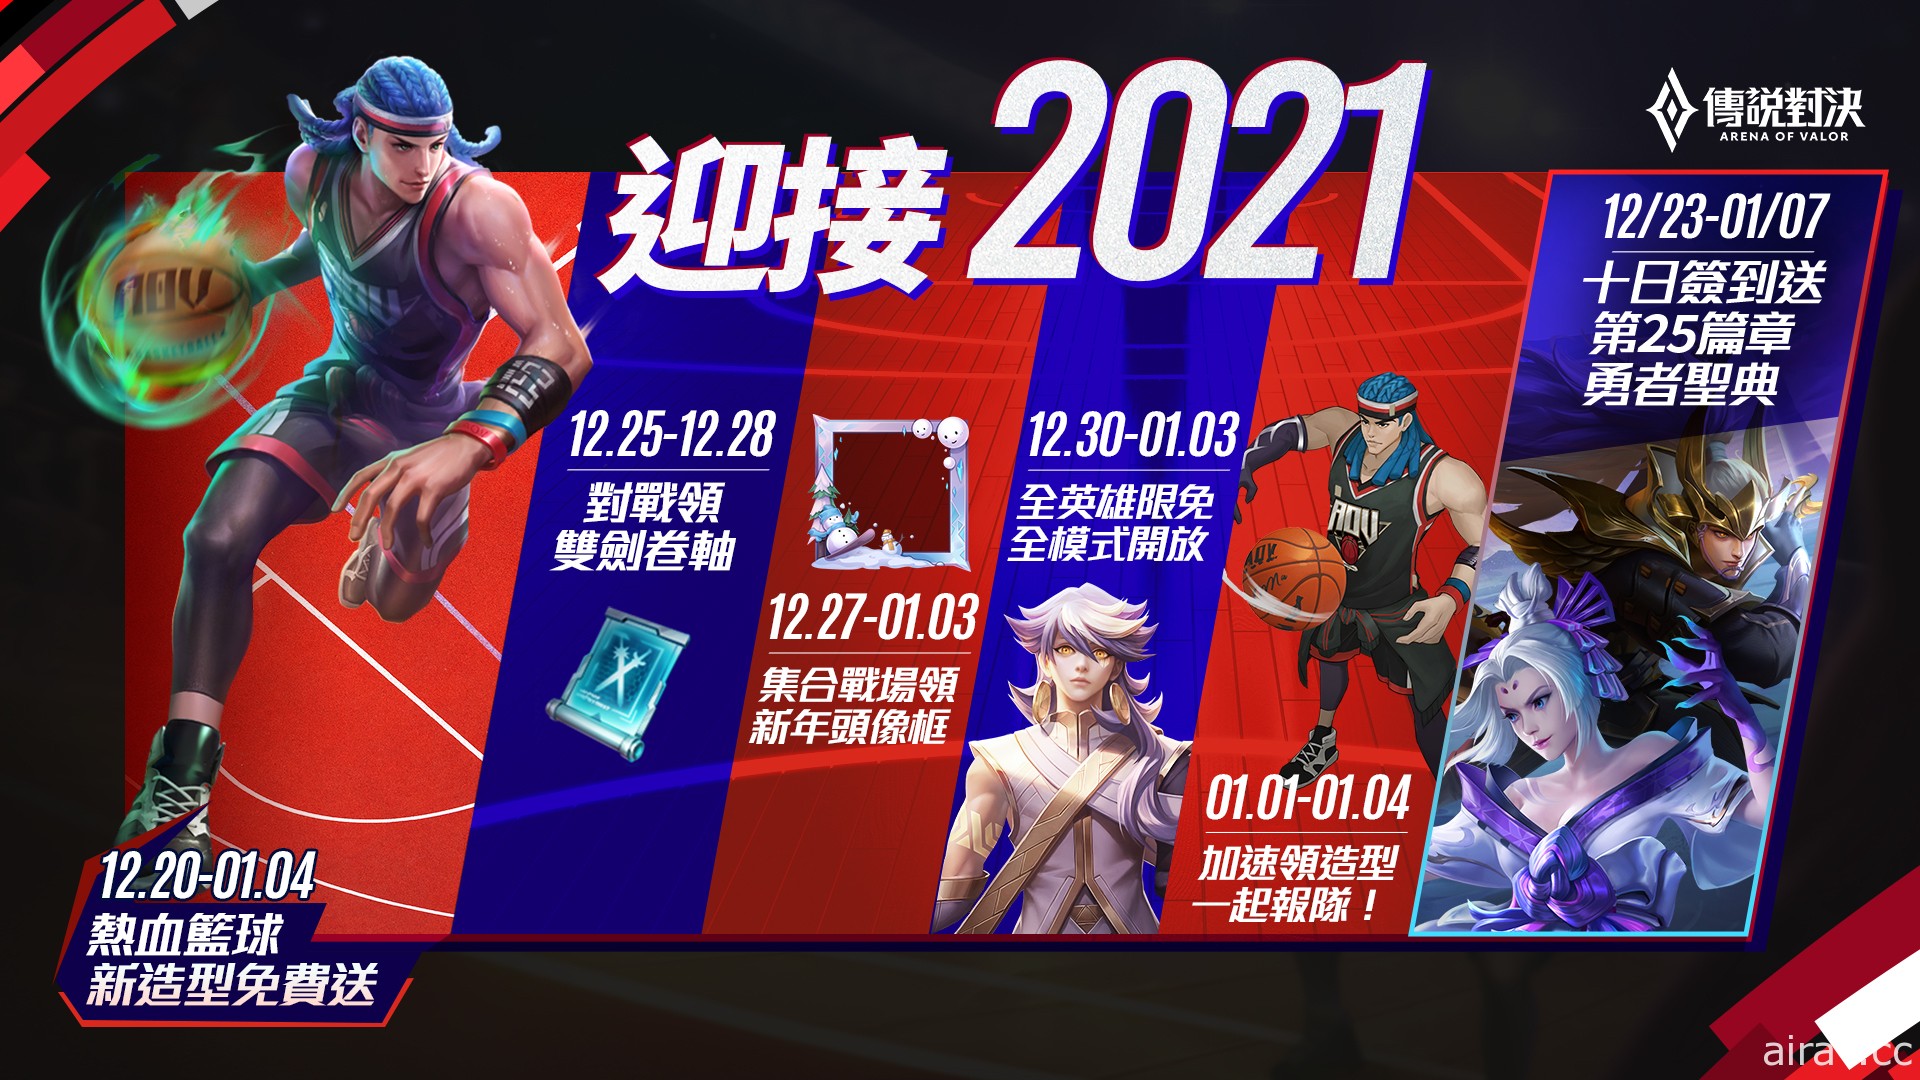 《Garena 傳說對決》首波跨年活動上線 邀玩家一同迎接 2021 年到來